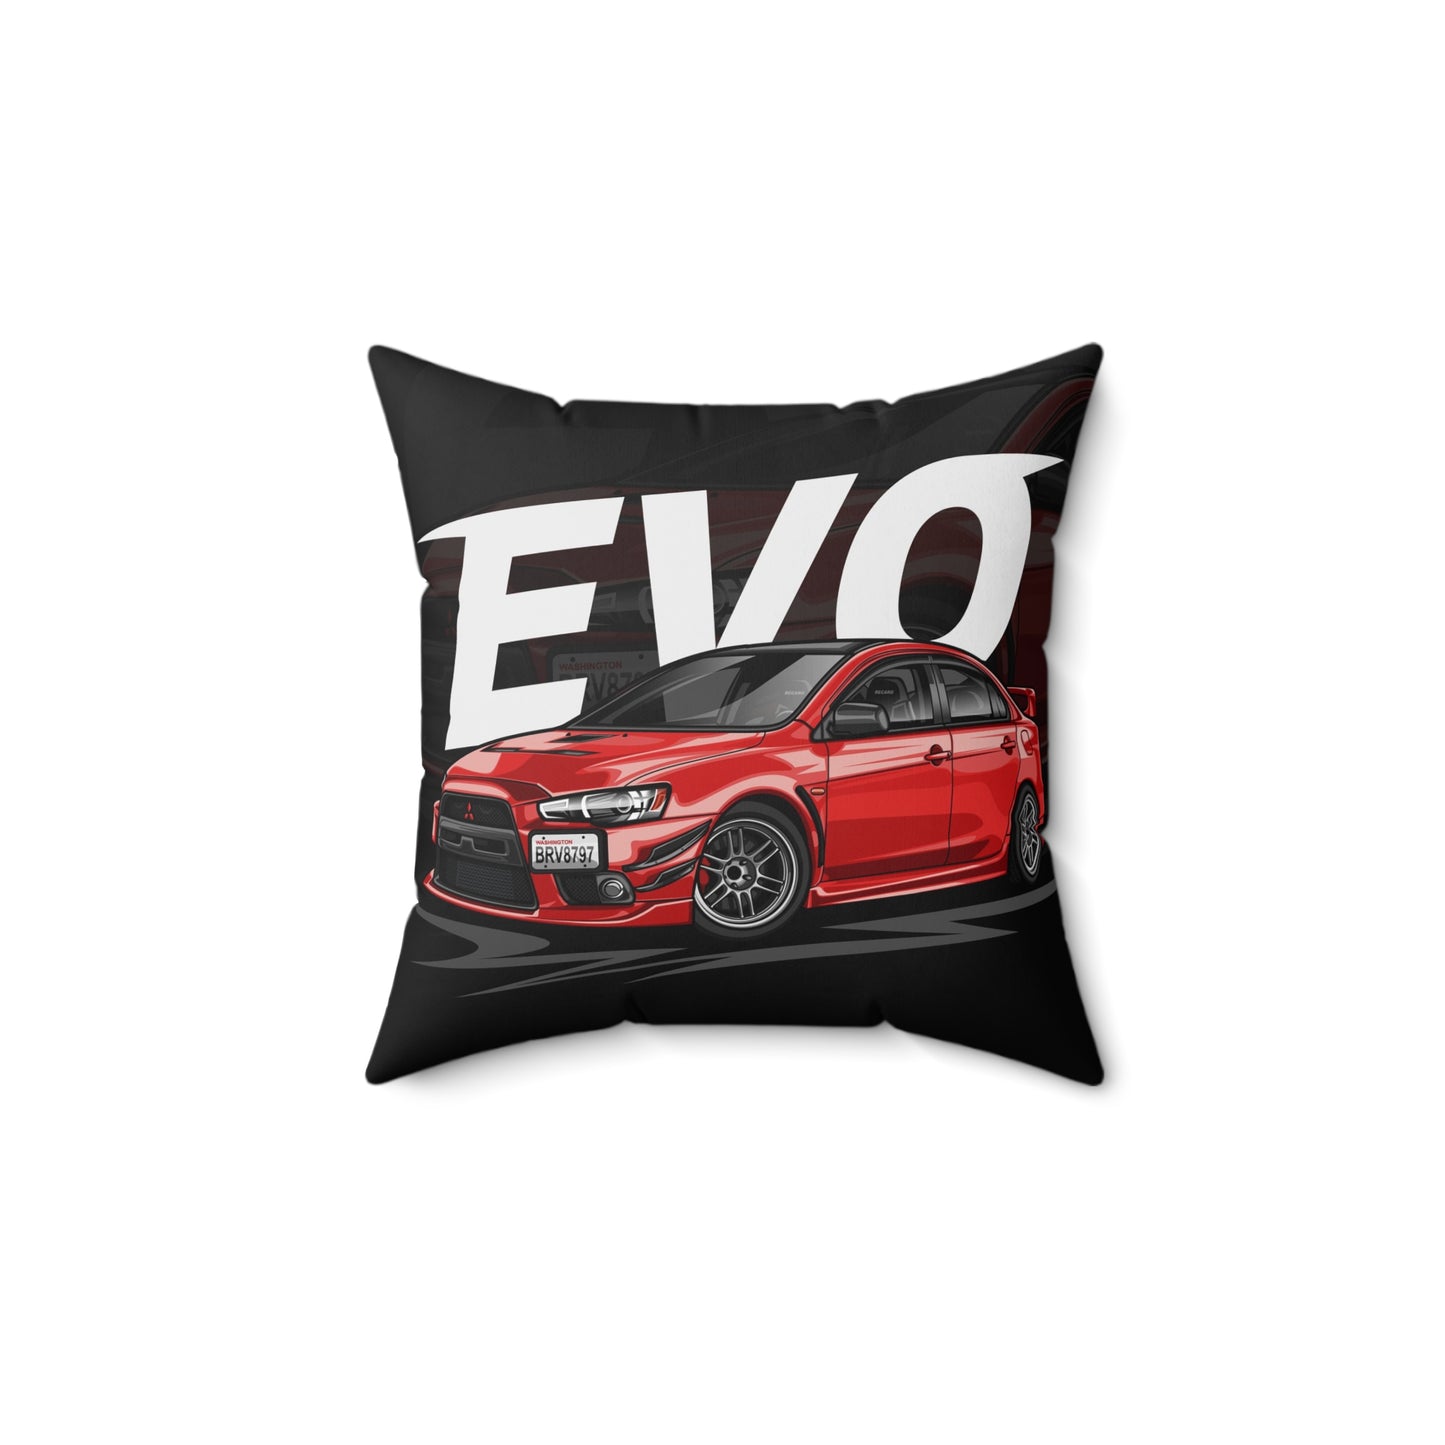 Evo X V3 Spun Polyester Square Pillow